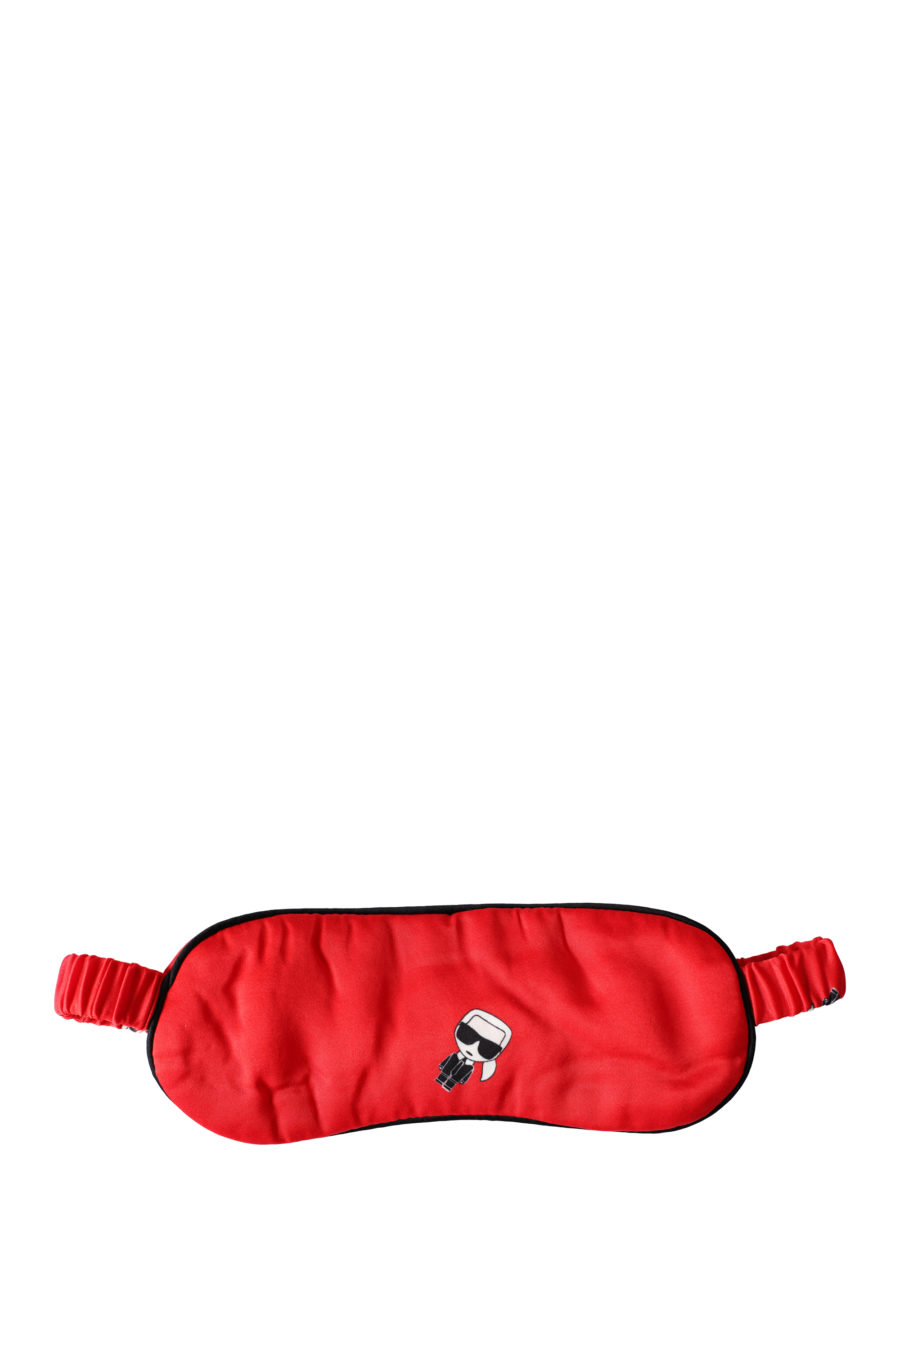 Set de regalo pijama de satén color rojo - IMG 3304